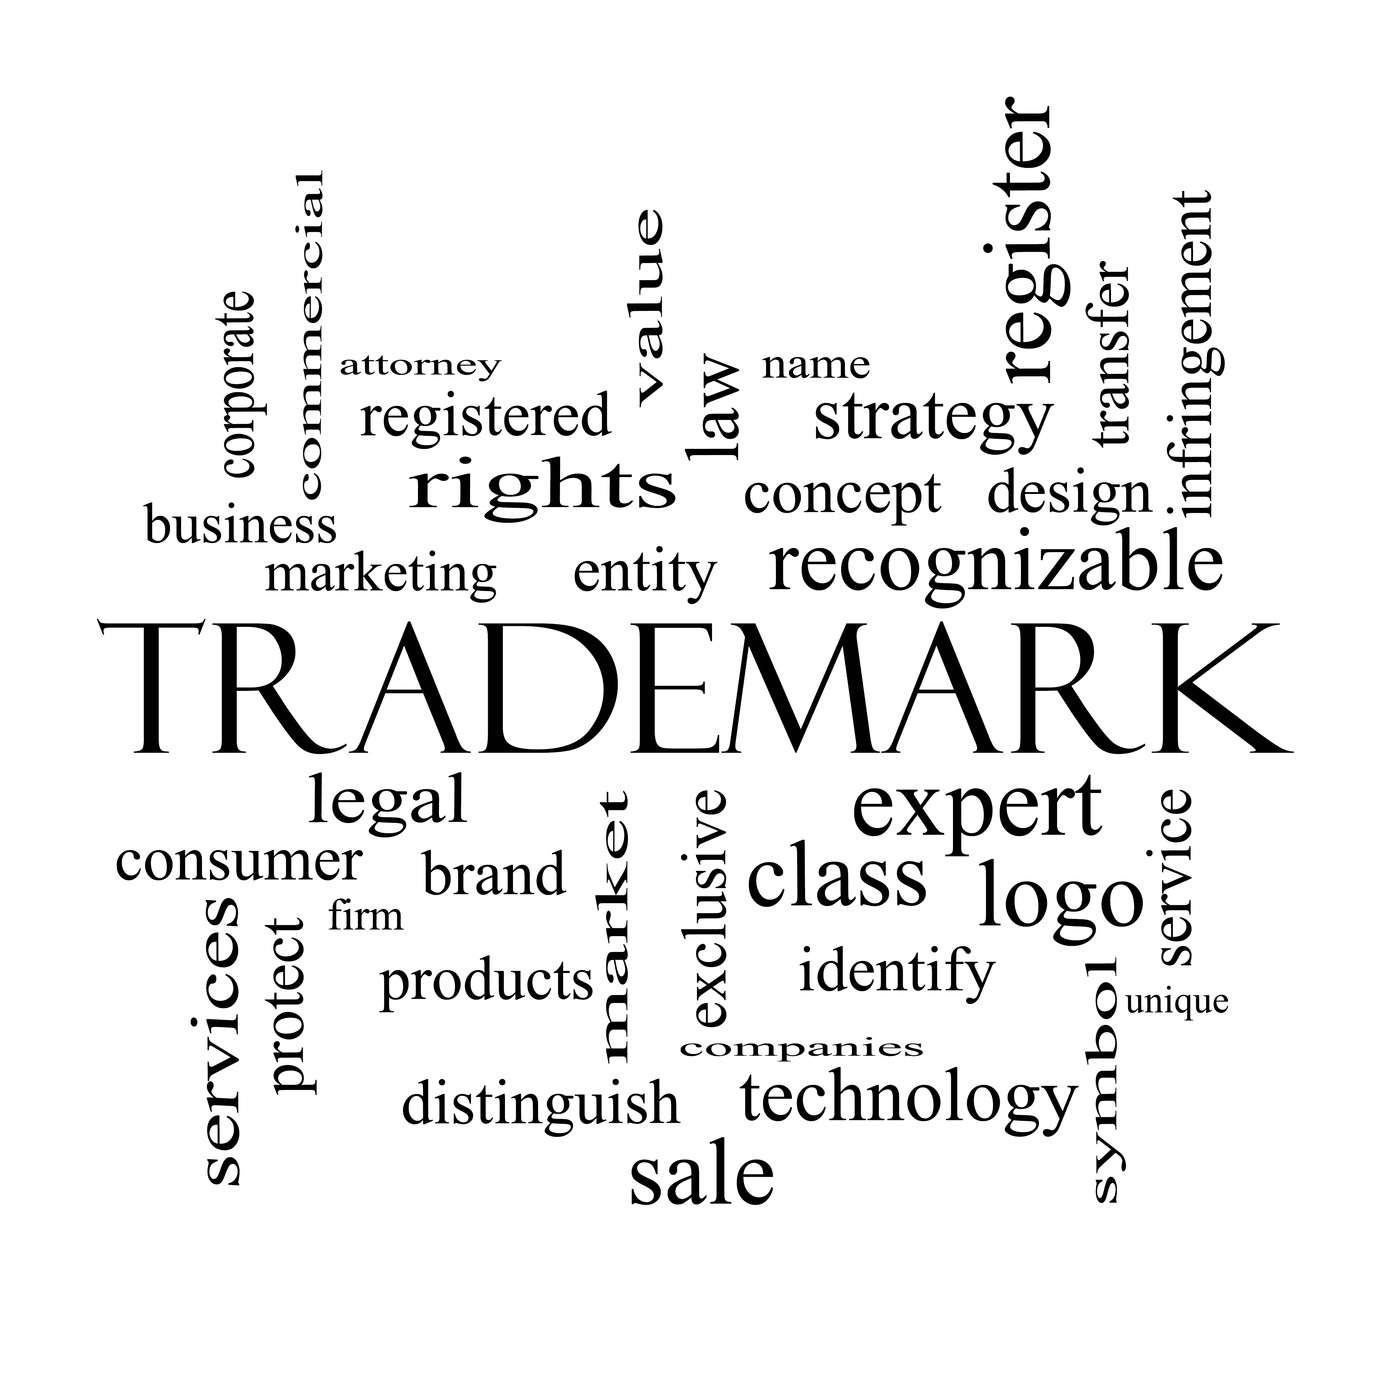 Trademark Laws in Pakistan